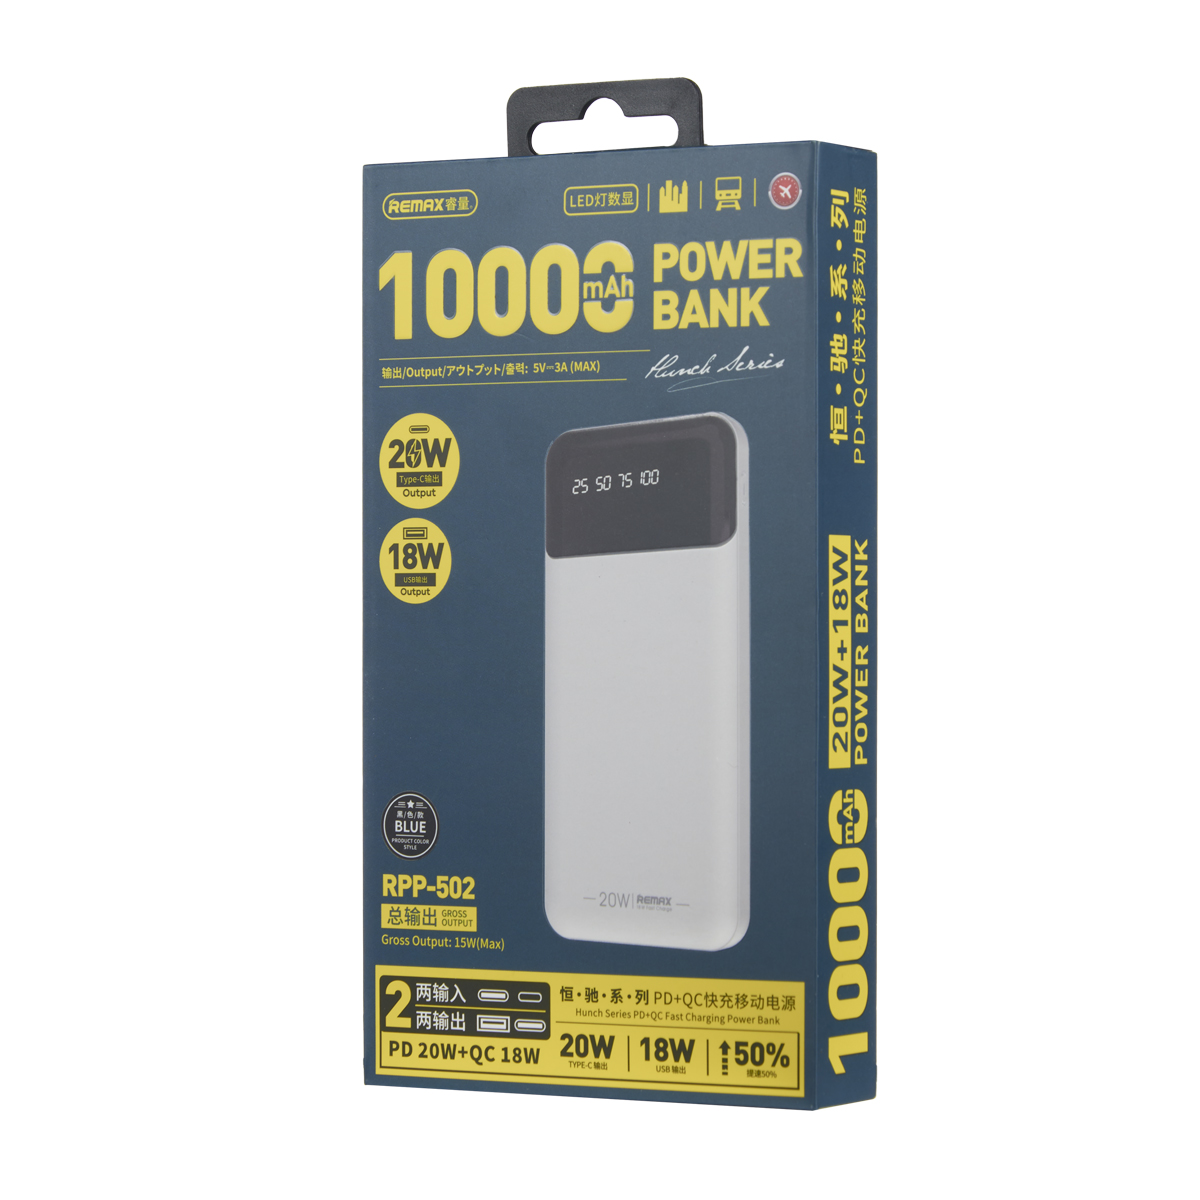 Power bank remax hunch rpp-502  20w+18w pd/qc fast charge 10000mah (crni)